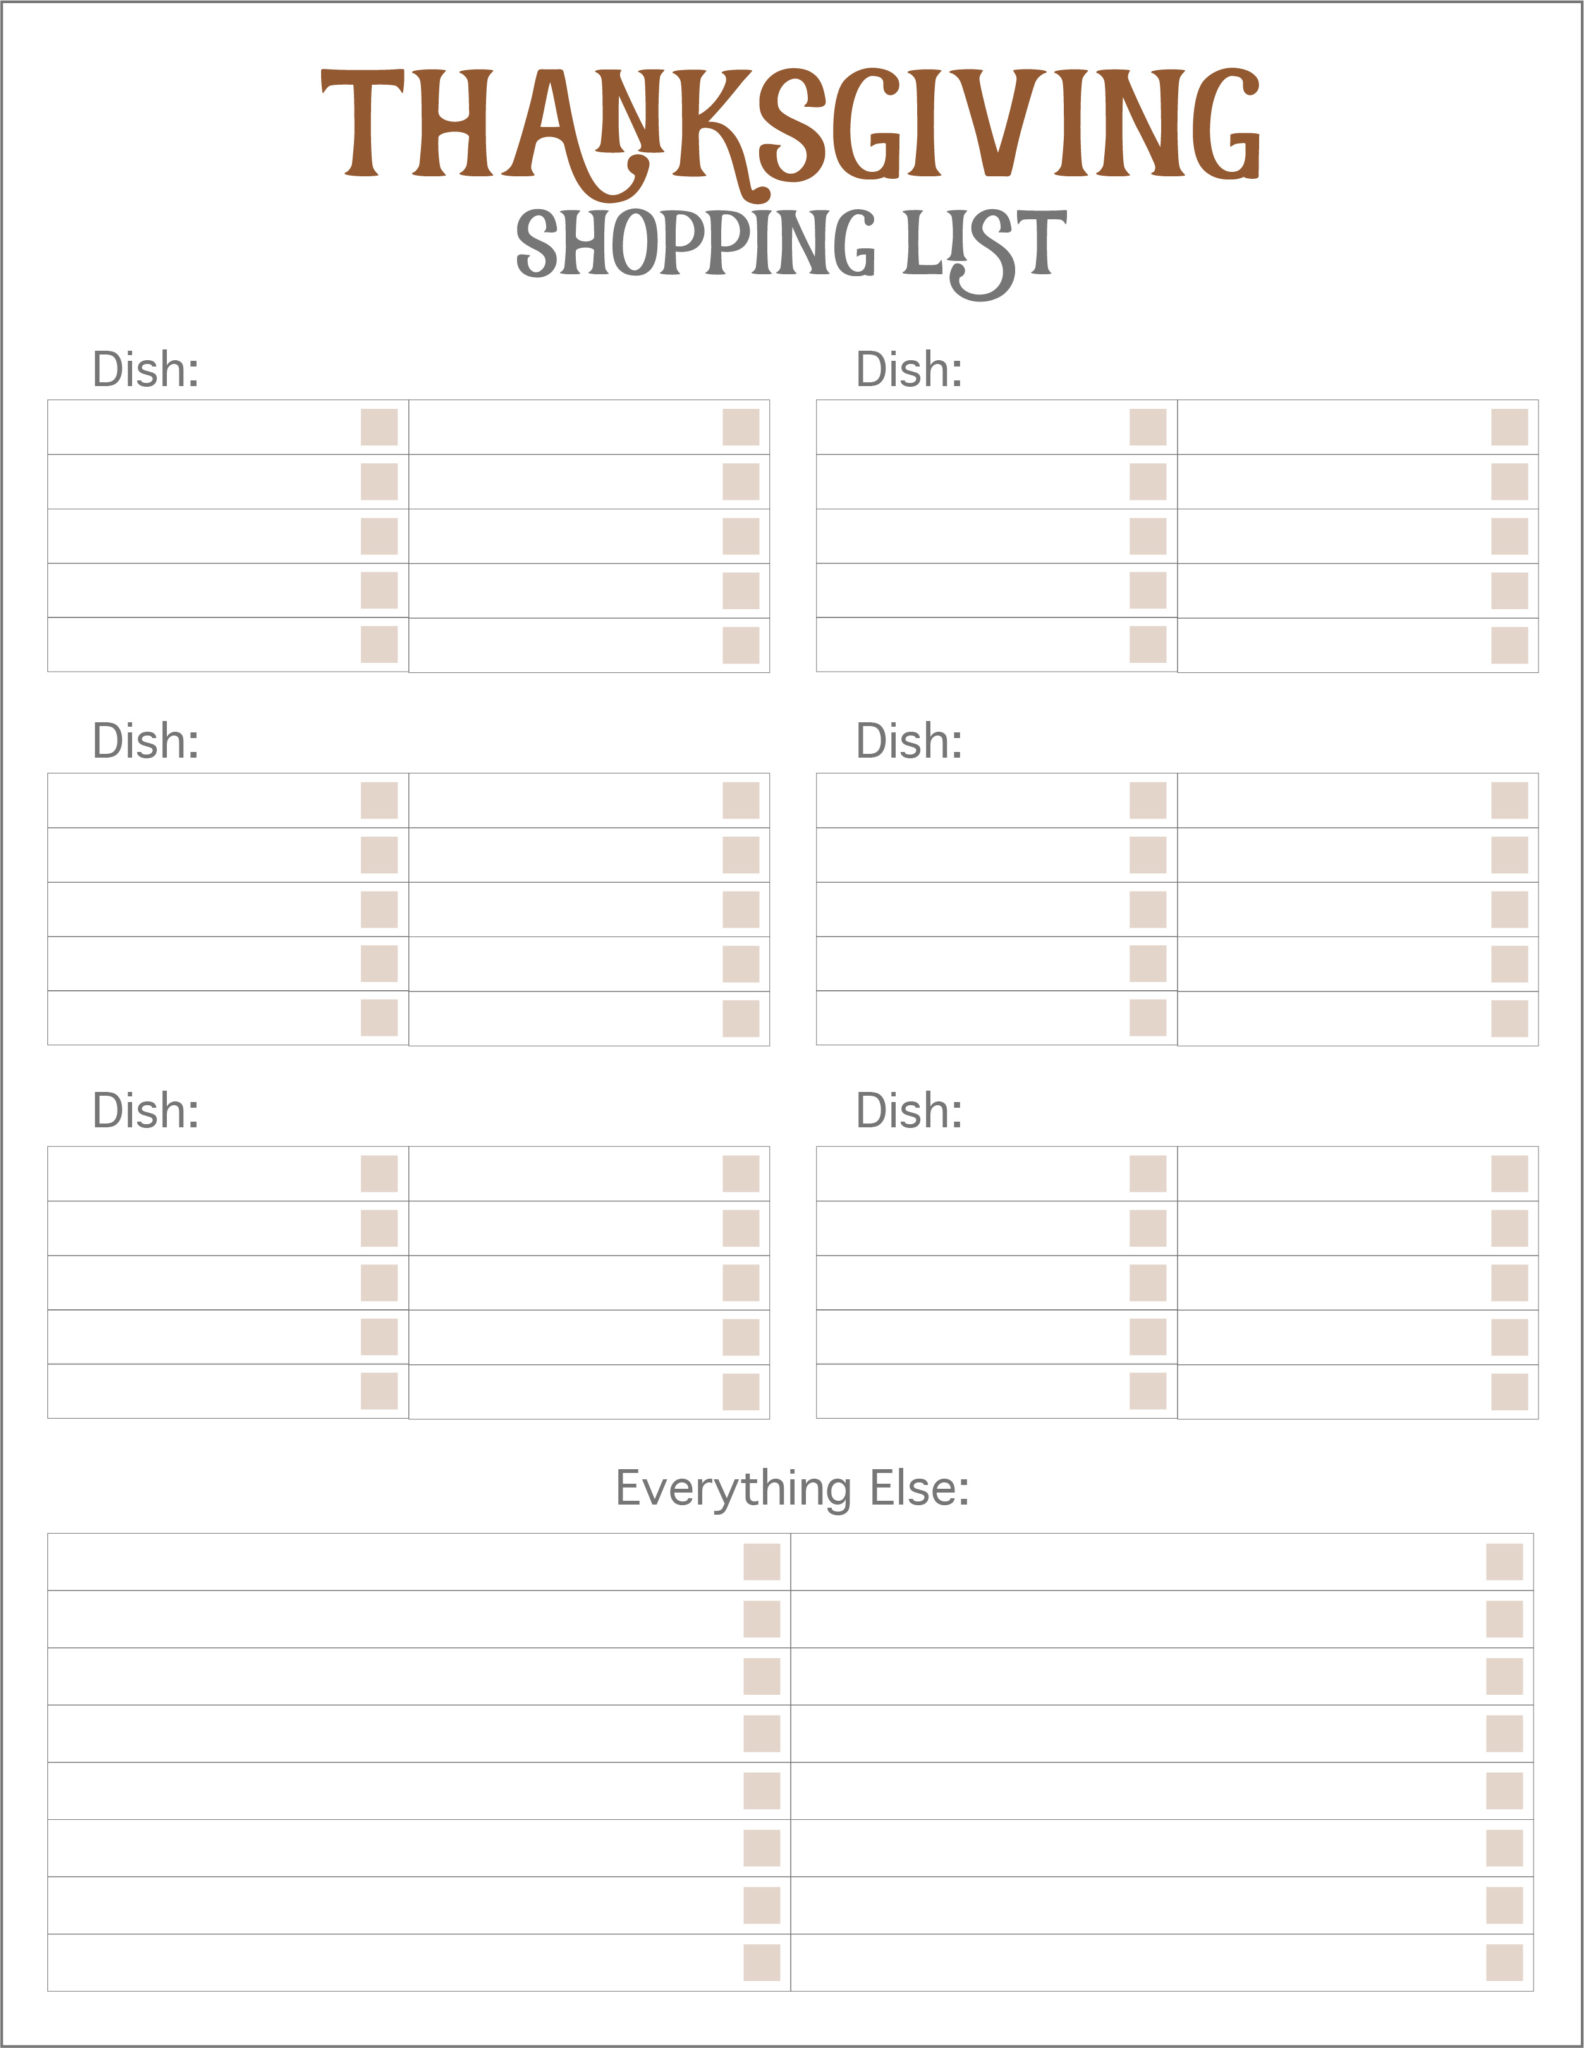 Thanksgiving shopping list. Thanksgiving list.